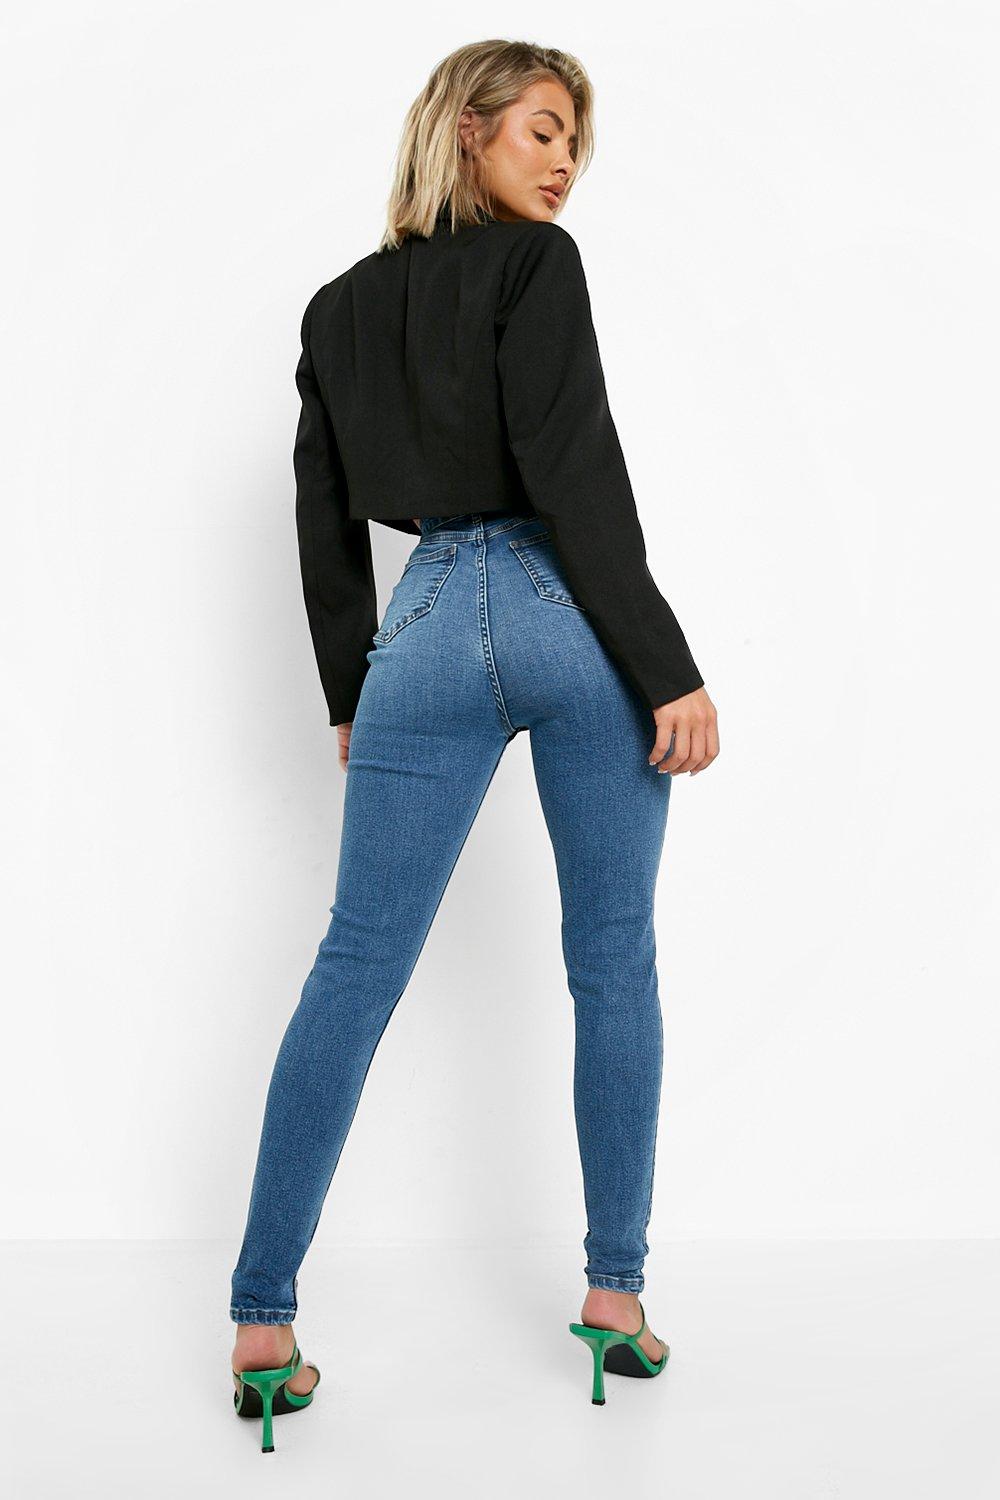 Mid waist Jeans/Jeggings pants Butt lifting Shaping - Black wash-Shop Now –  Wonderfit Australia